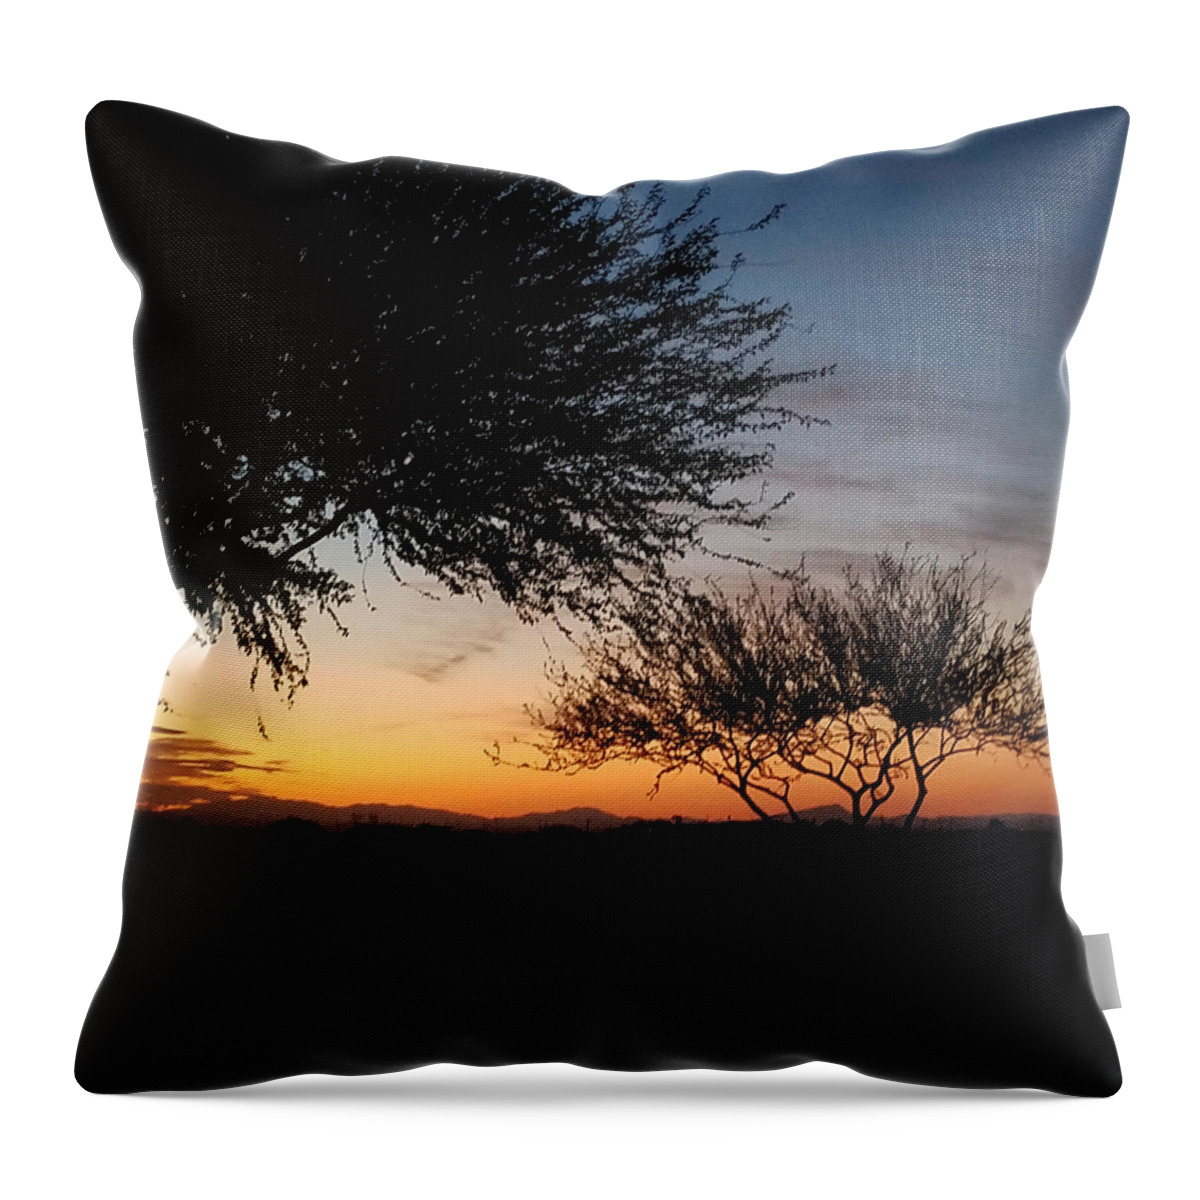 Arizona Throw Pillow featuring the photograph Arizona Sunset by Vic Ritchey